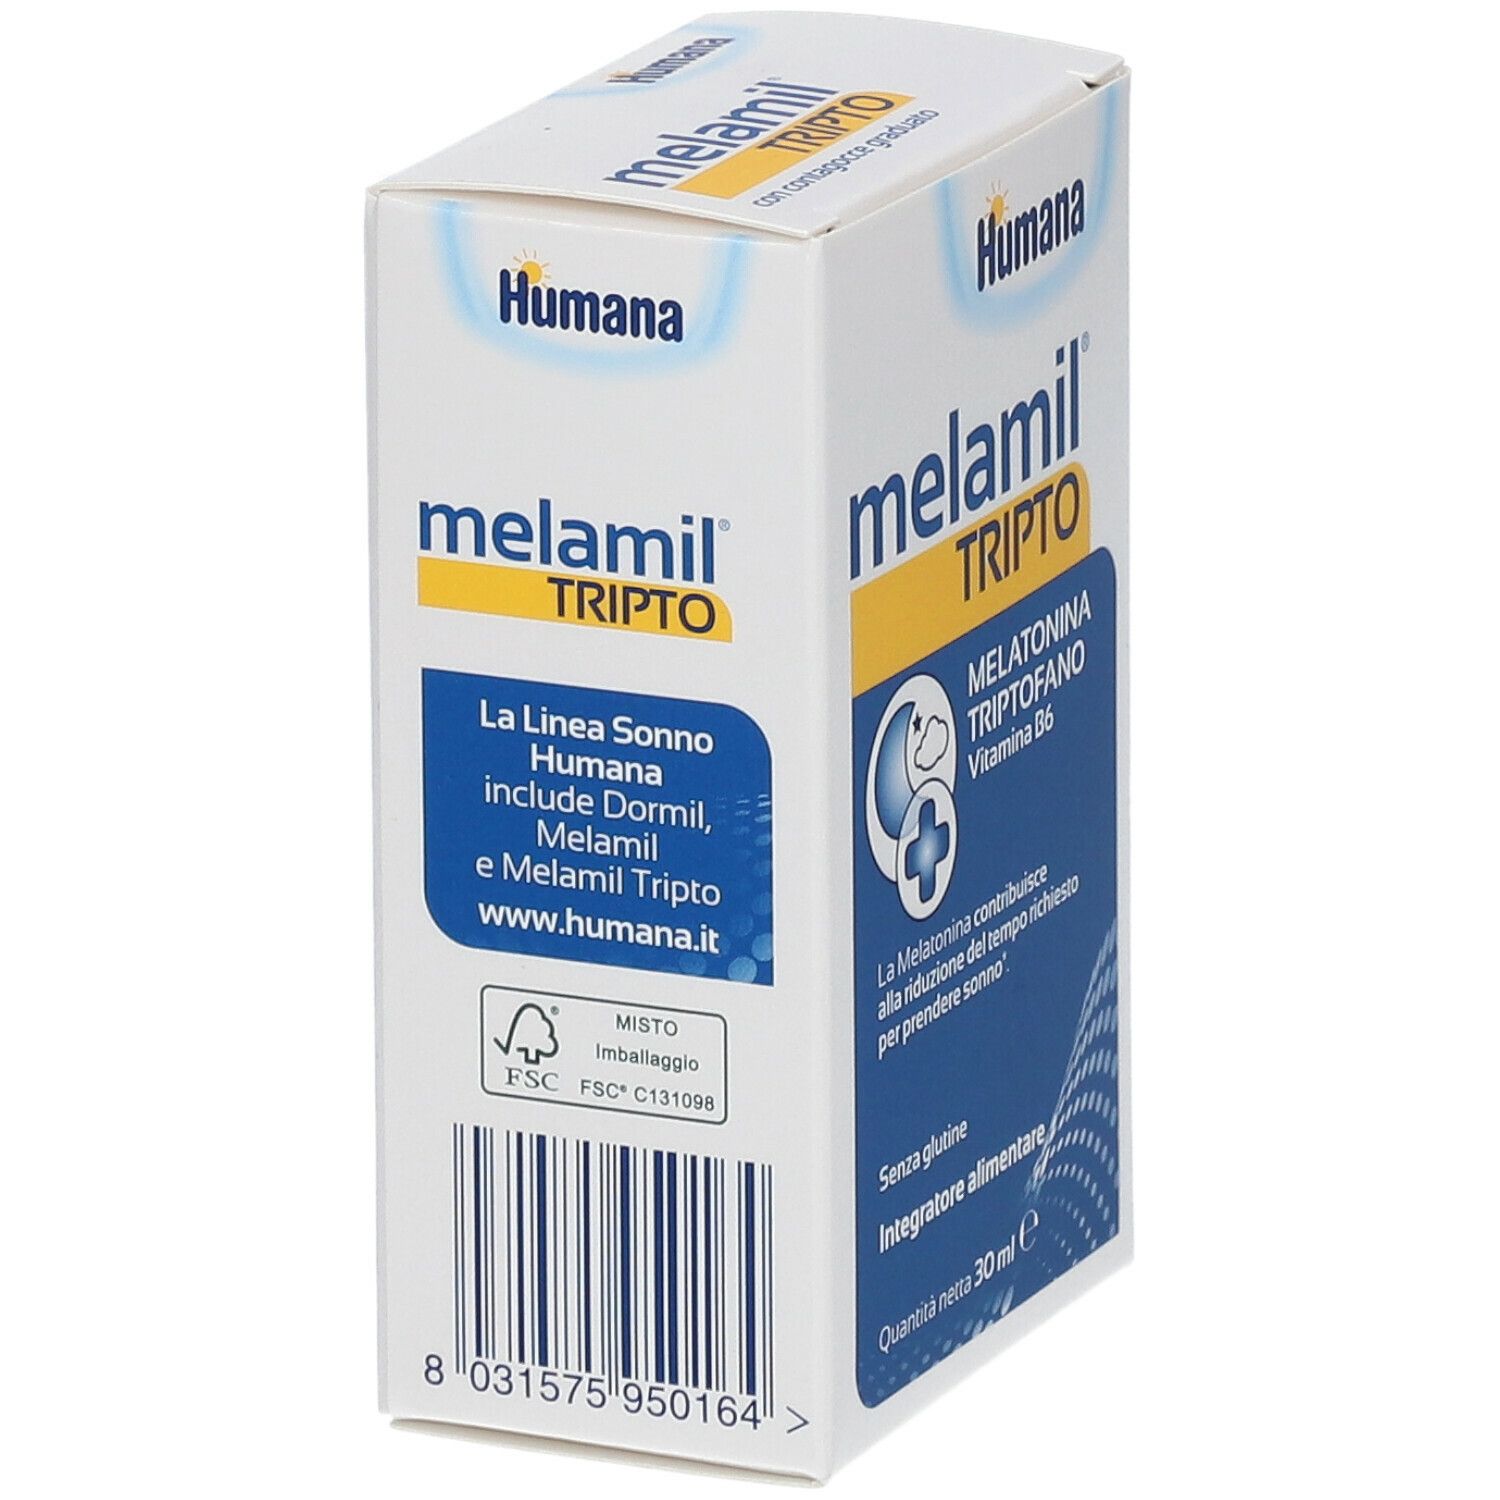 Humana MELAMIL Tripto, a base de melatonina, triptófano y vitamina